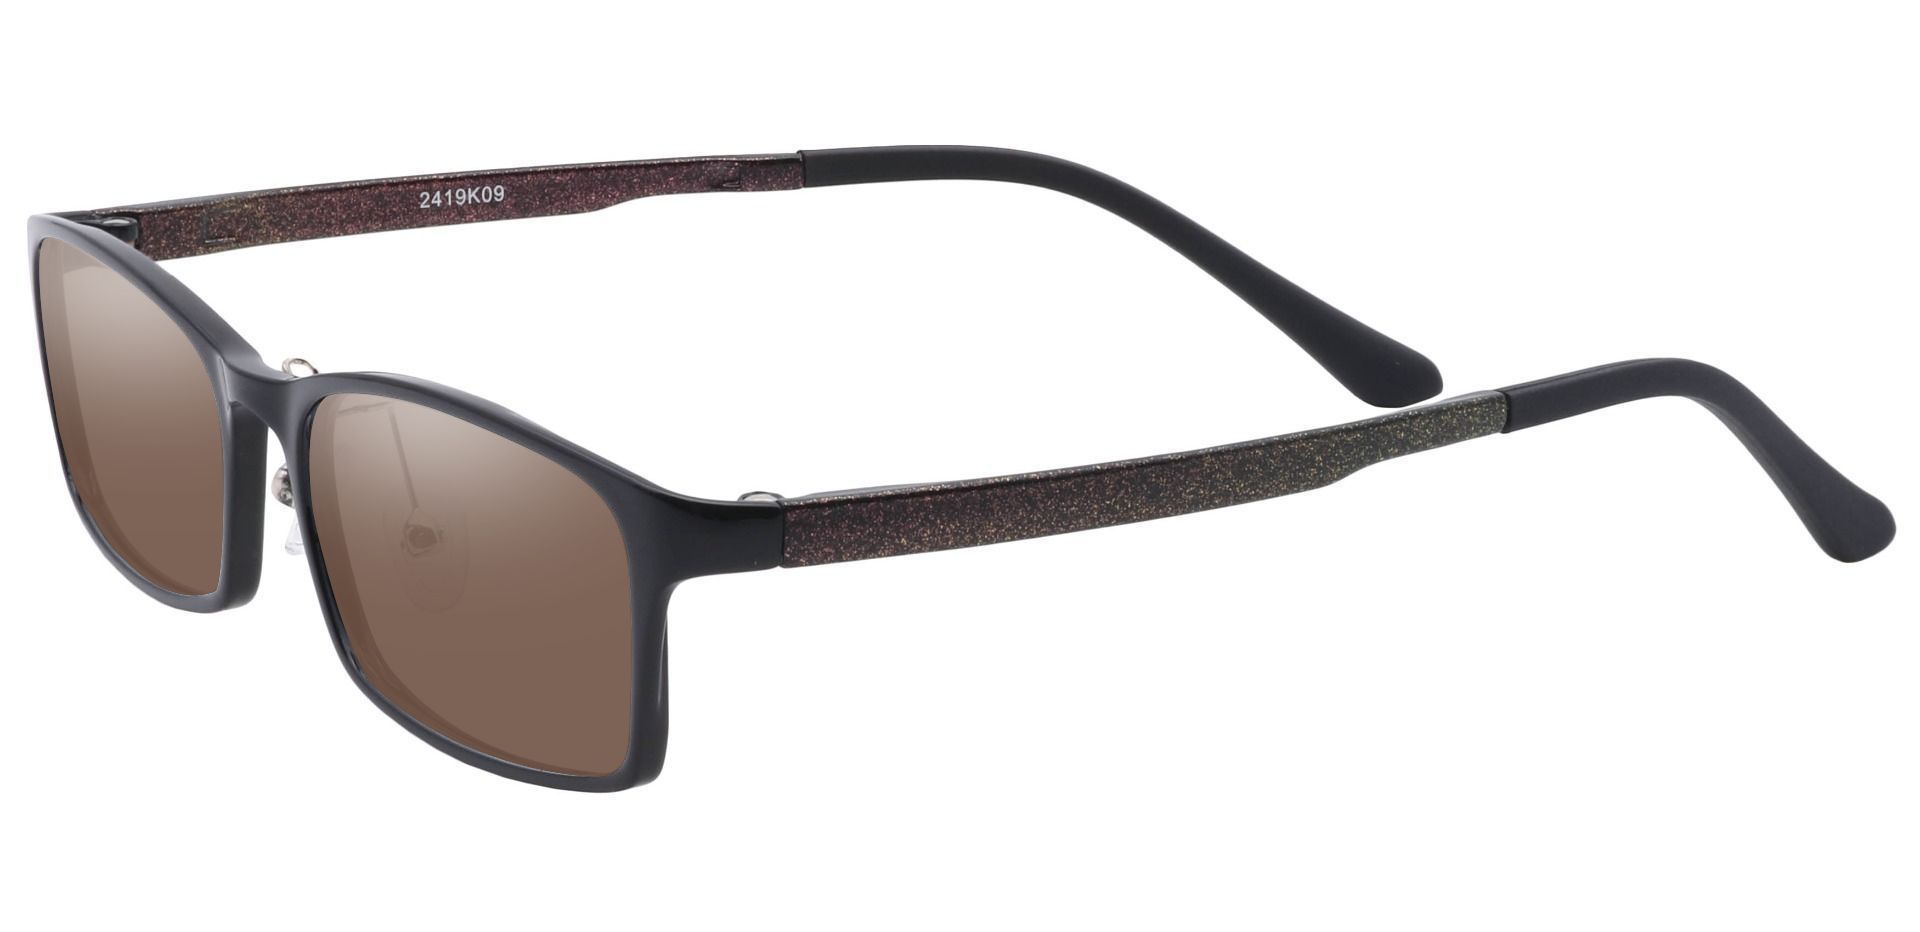 Hydra Rectangle Prescription Sunglasses -  Black Frame With Brown Lenses